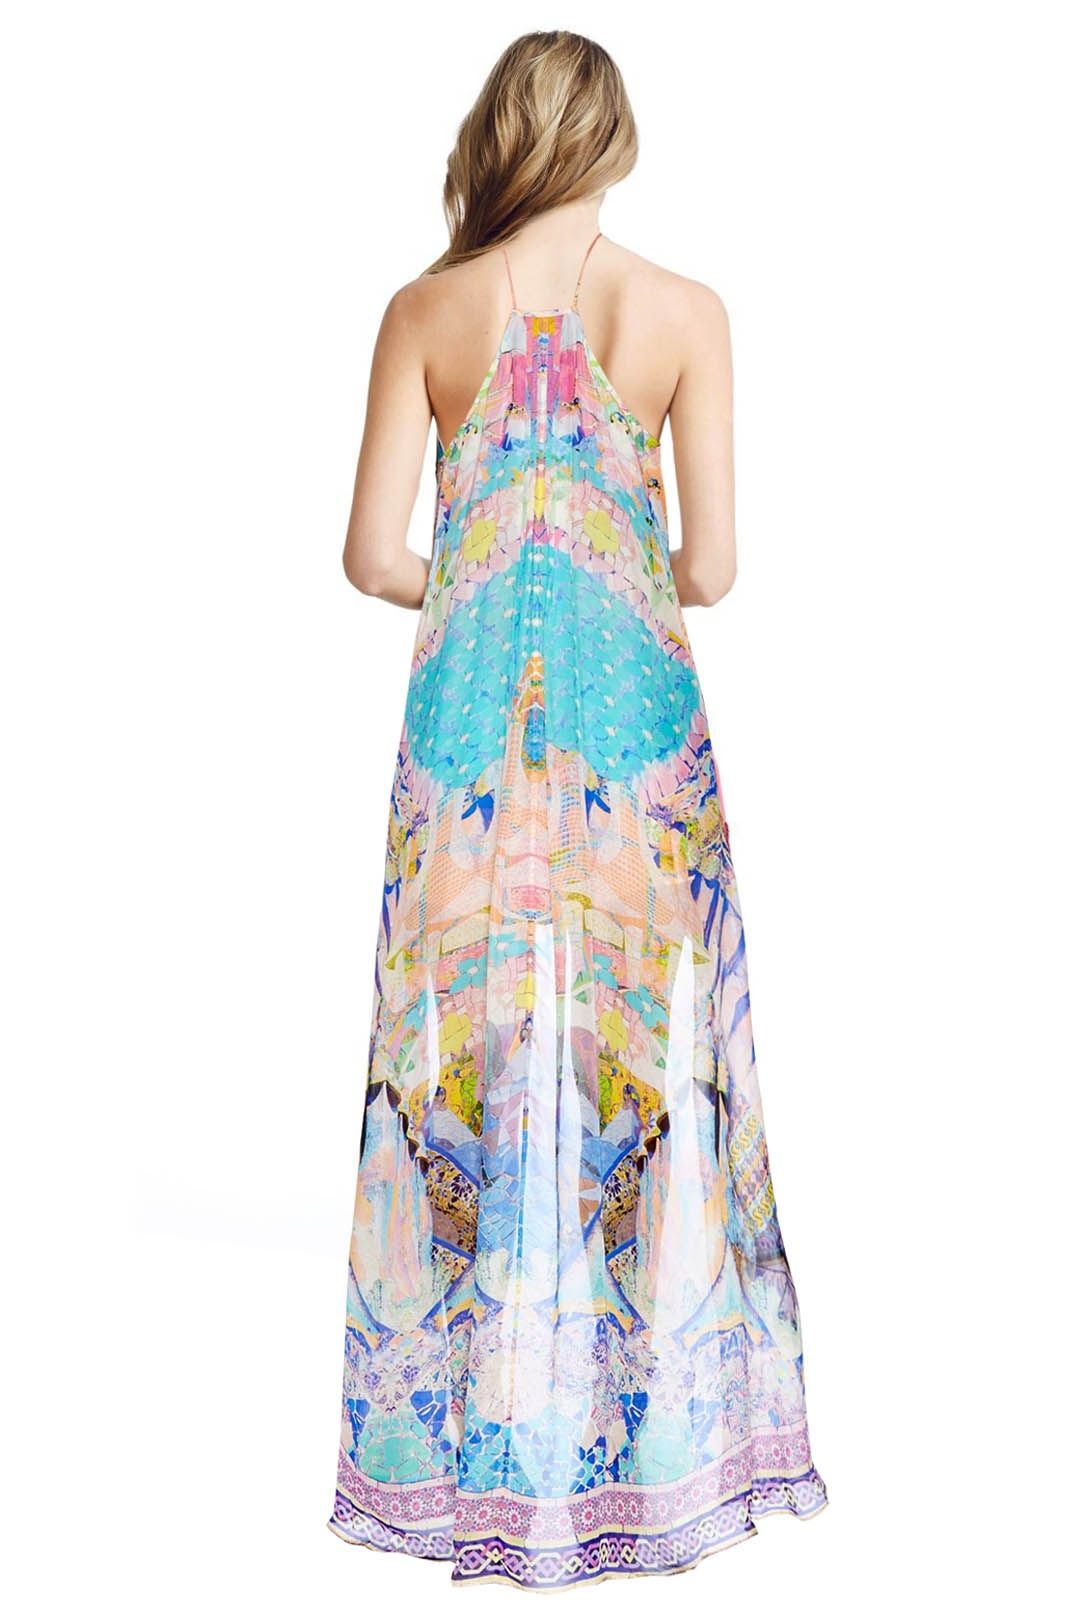 Gaudi Tribute Dress by Camilla for Rent | GlamCorner